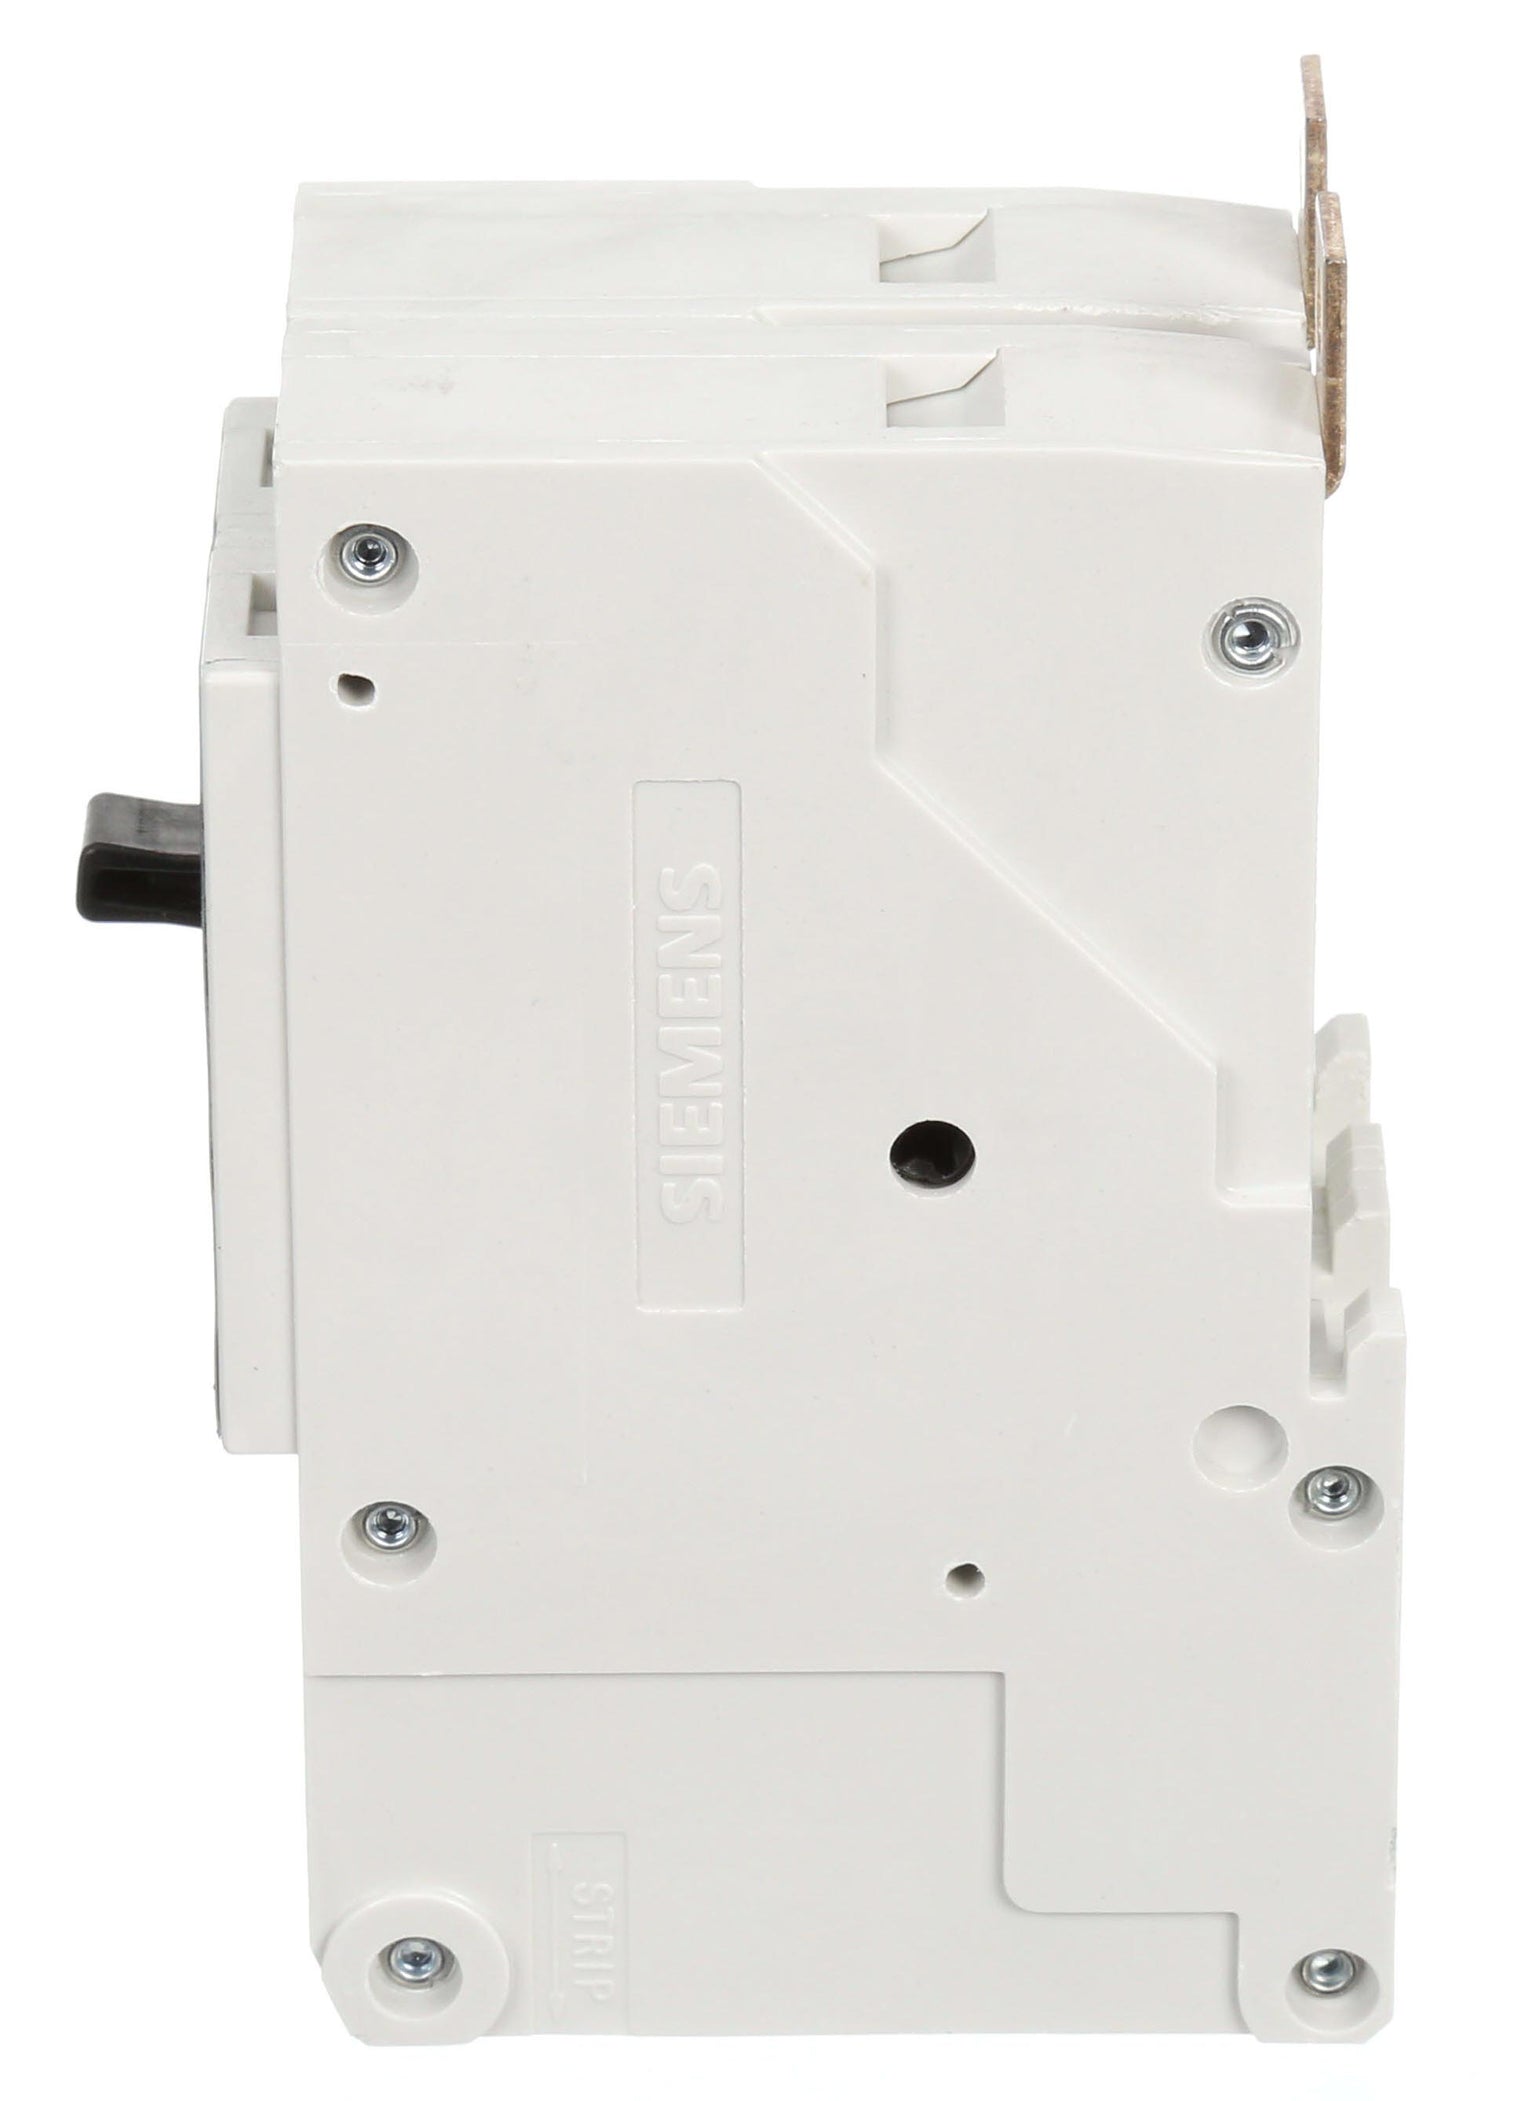 NGB2B110B - Siemens - Molded Case Circuit Breaker